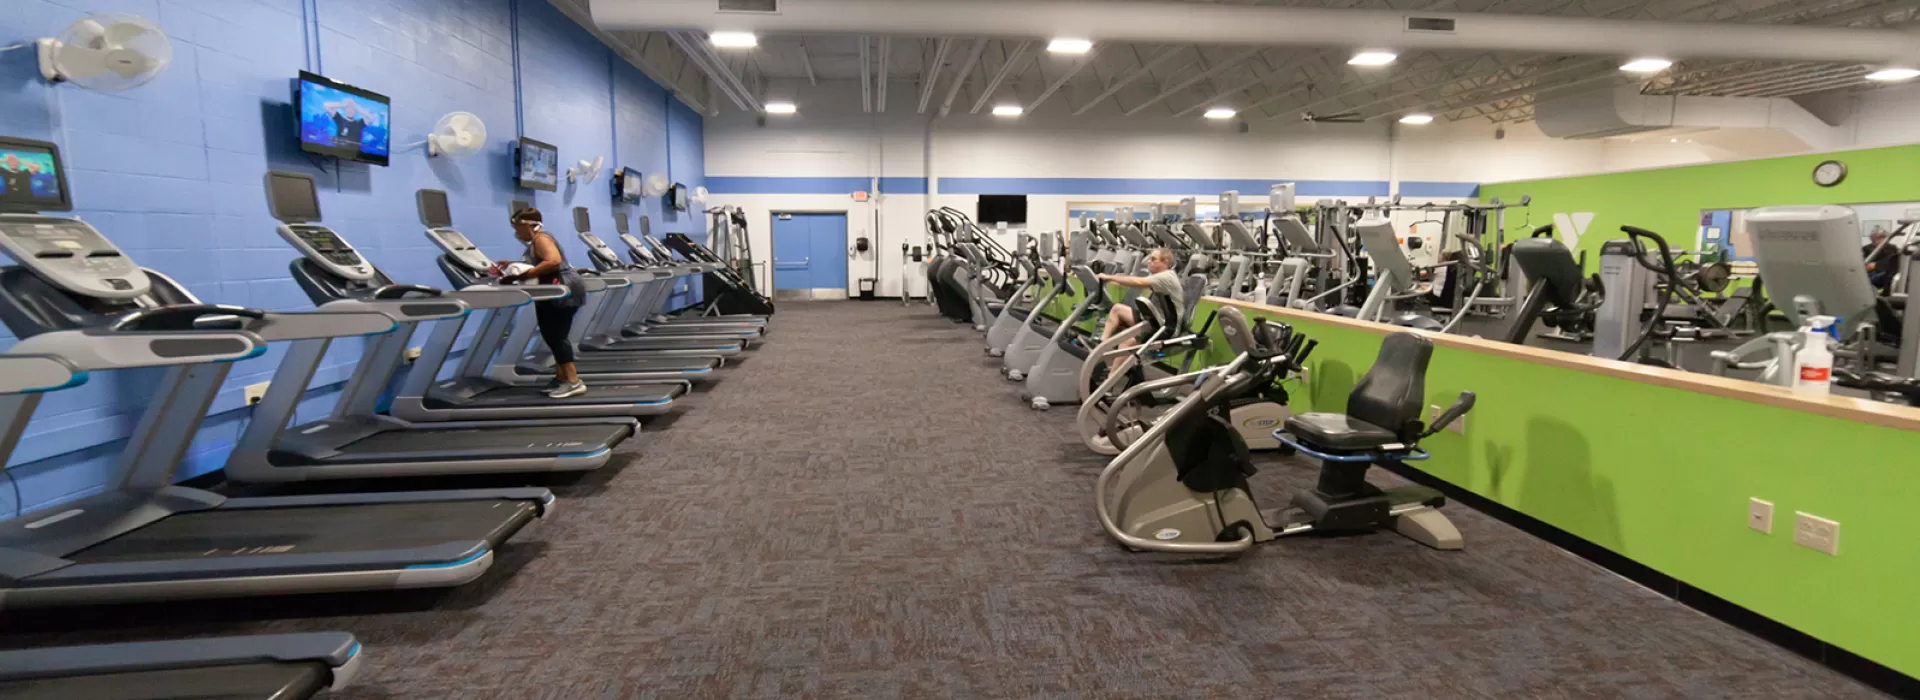 YMCA Memberships vs. Fitness Centers